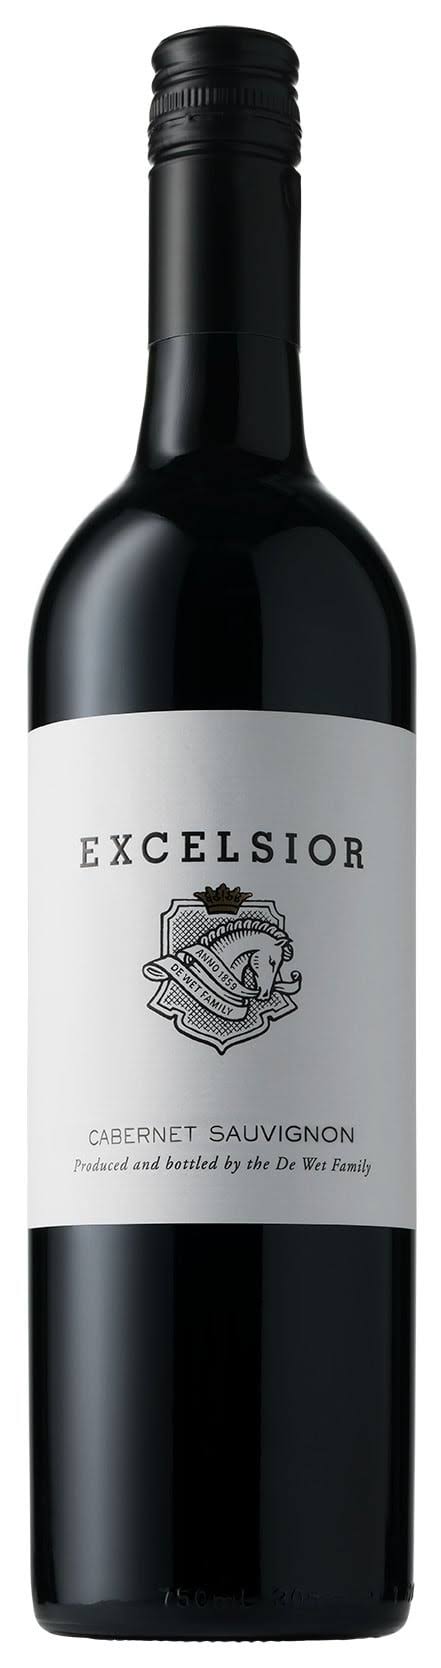 Excelsior Cabernet Sauvignon